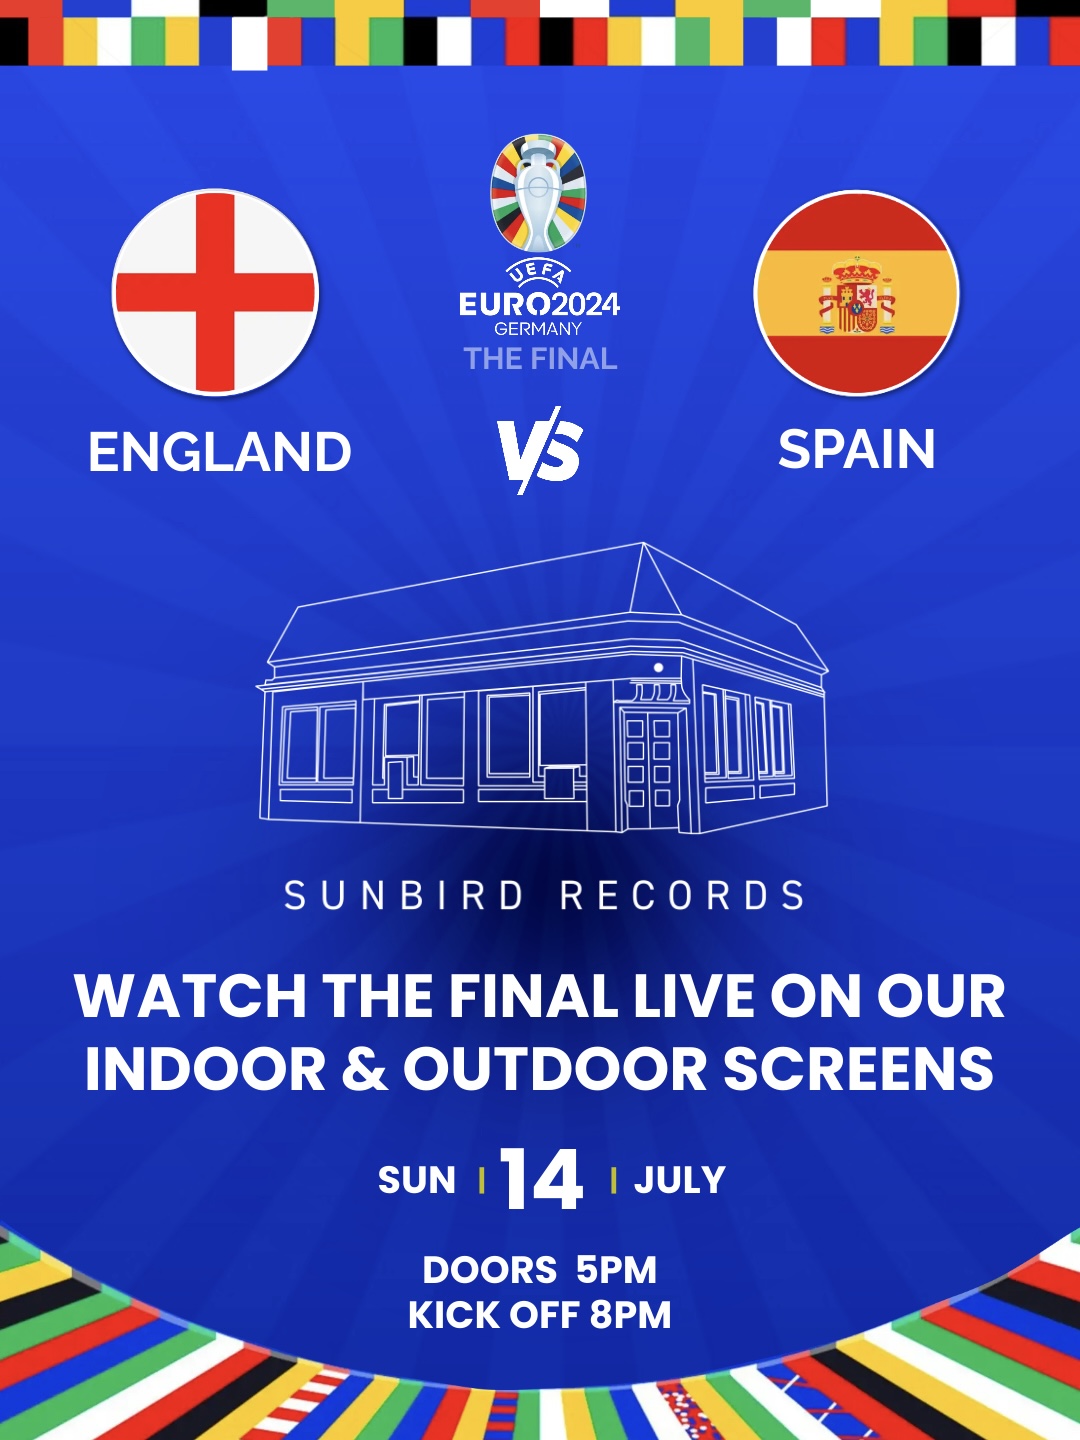 Euros 2024 – The Final – England vs Spain